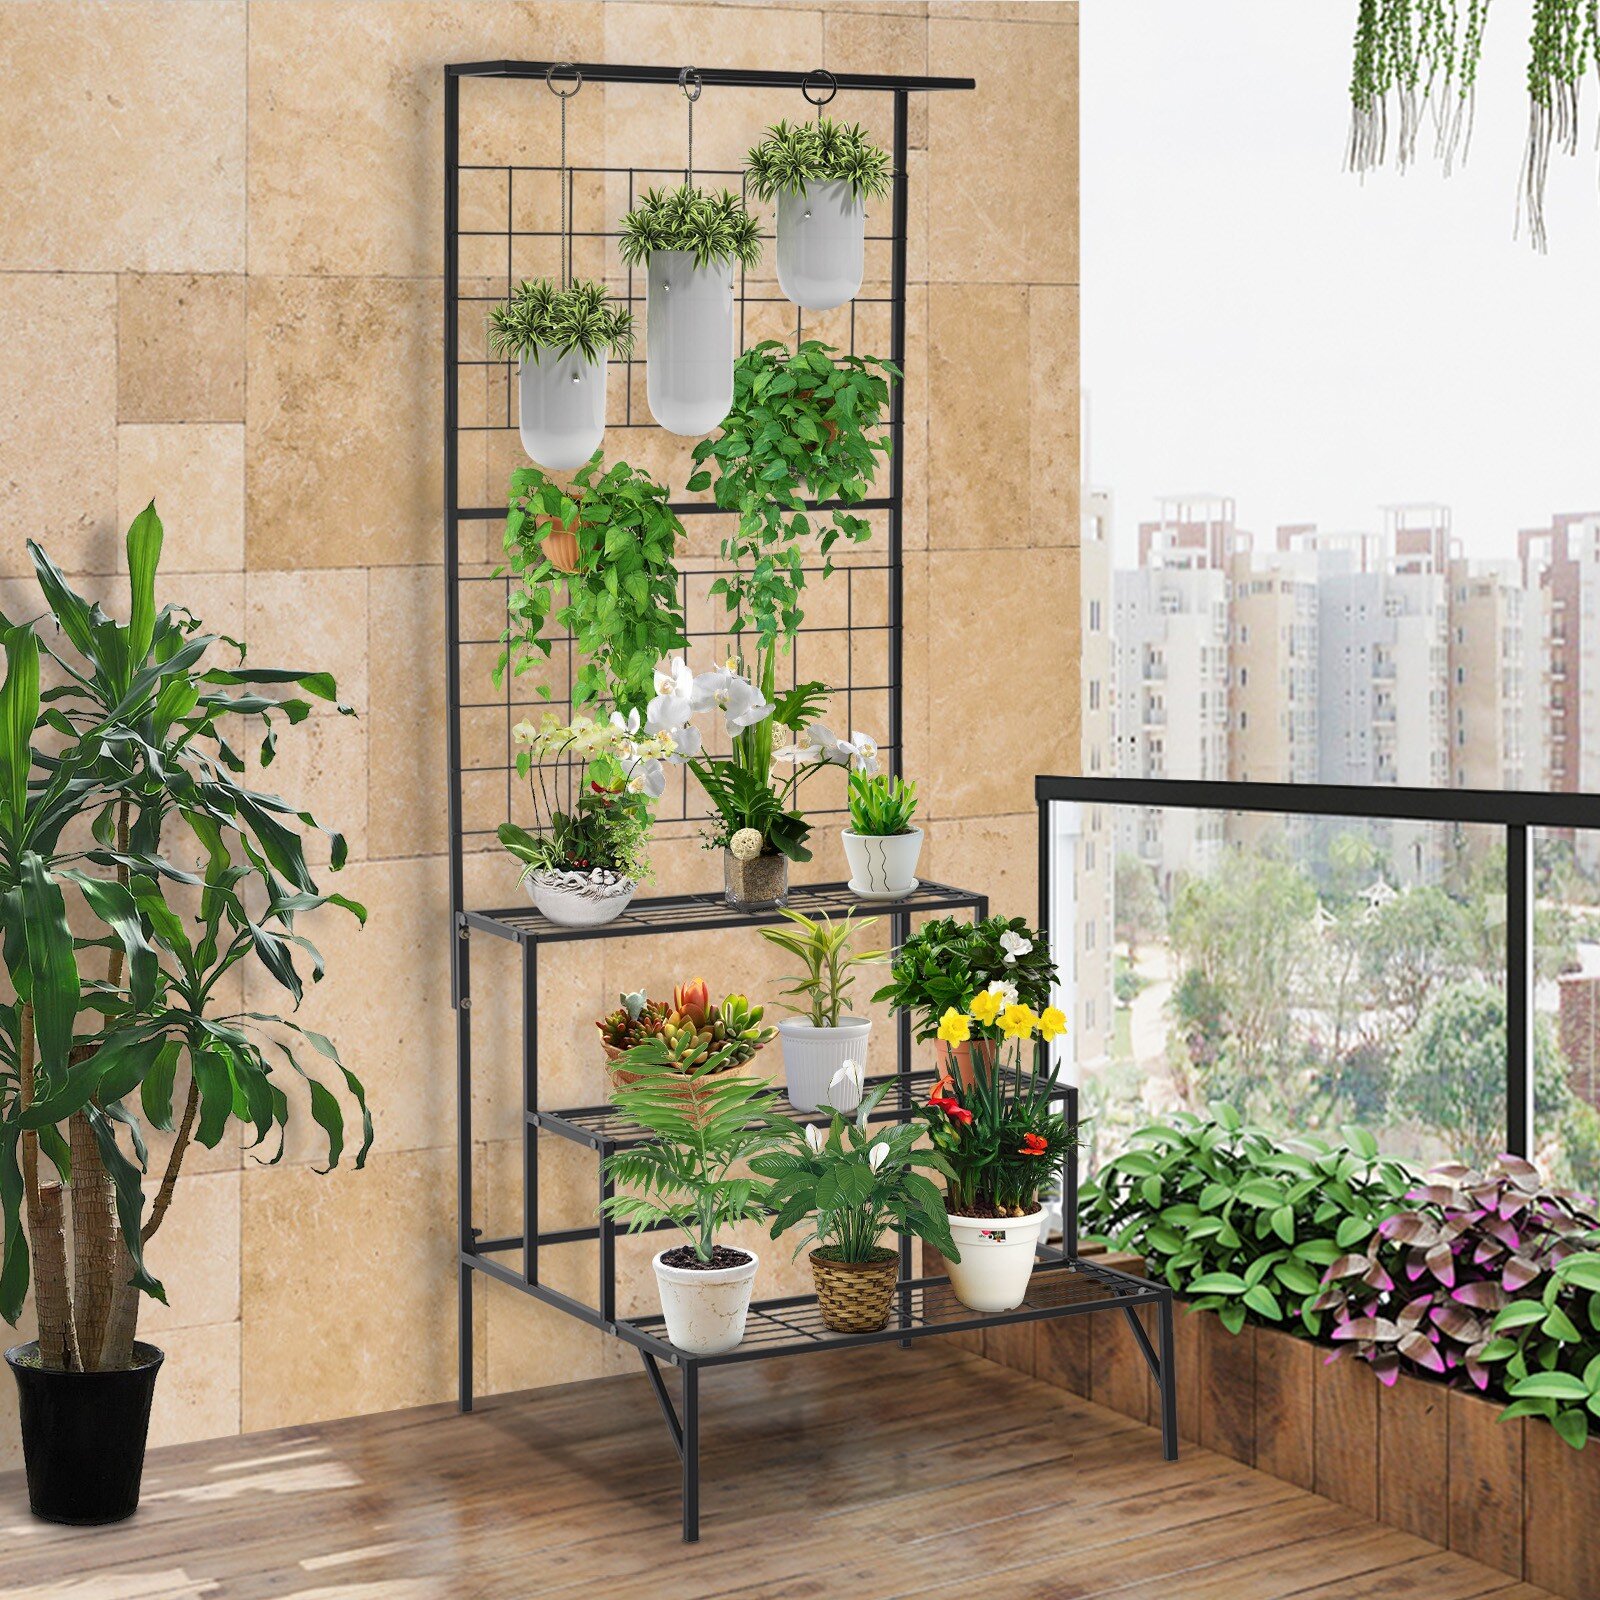 Details about  / Plant Flower Pot Shelf Stand Garden Storage Rack Display Ladder with Hanging Bar